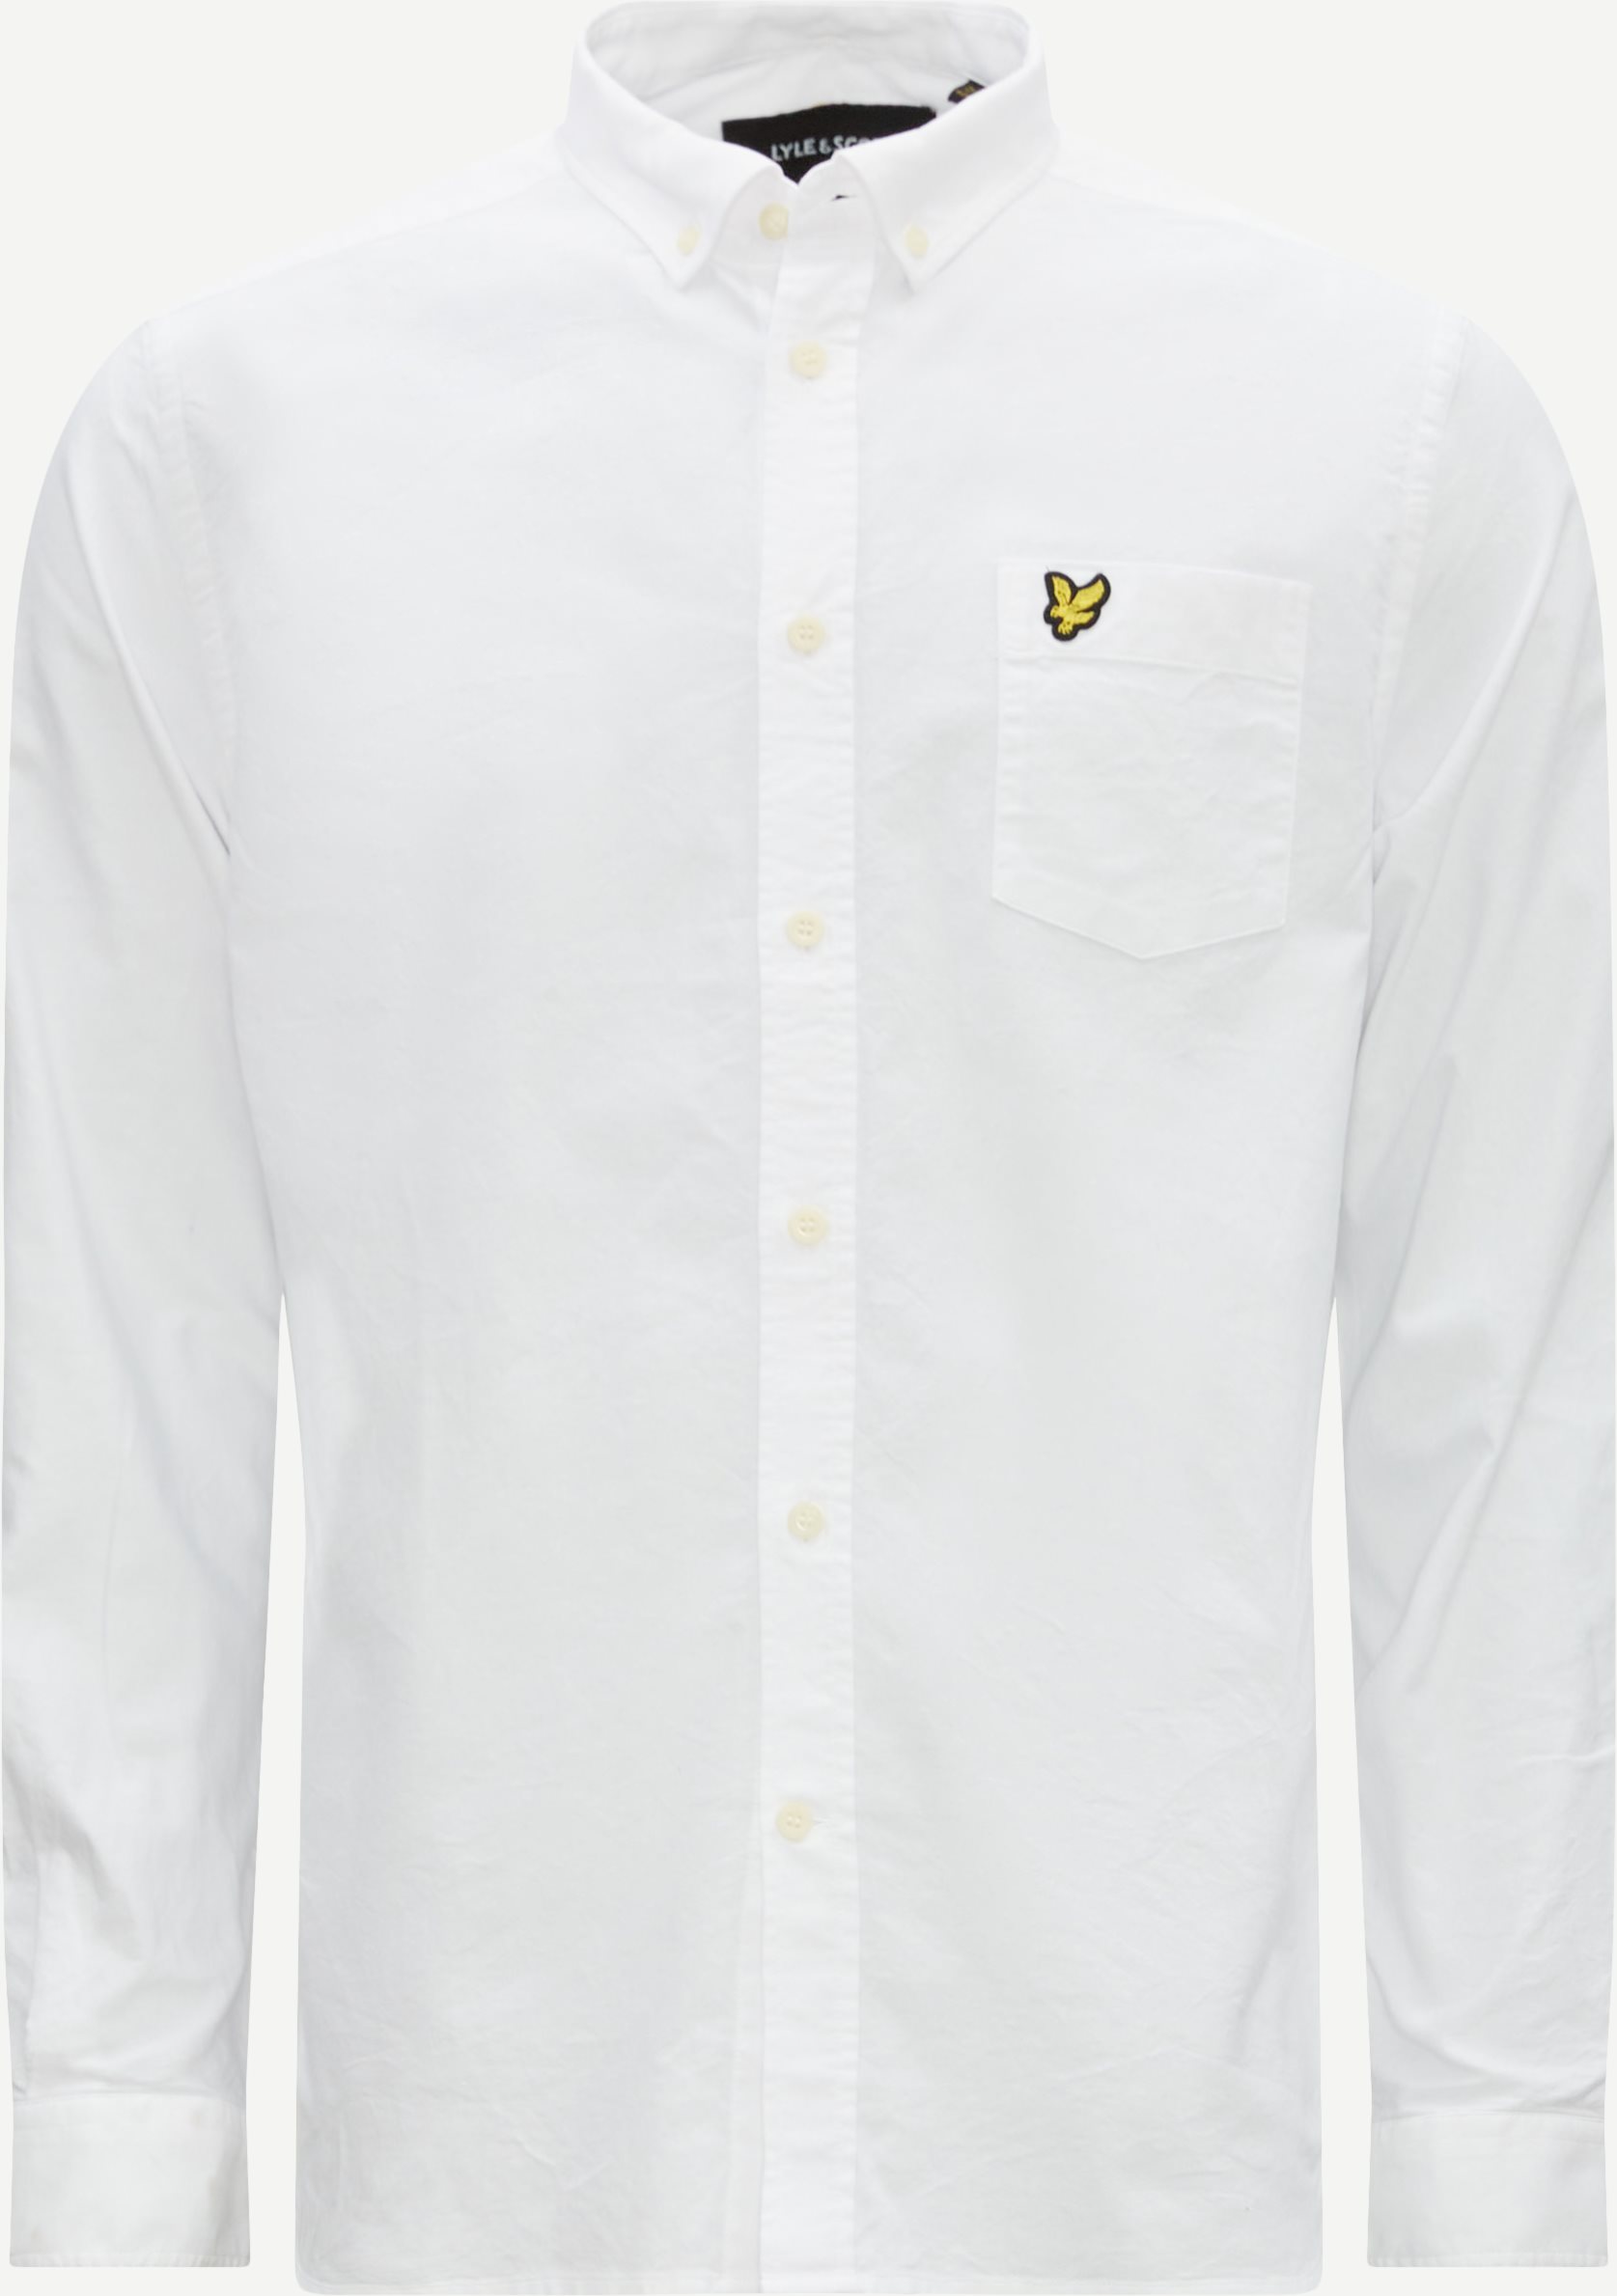 Lyle & Scott Shirts LIGHT WEIGHT OXFORD SHIRT LW1302VOG White